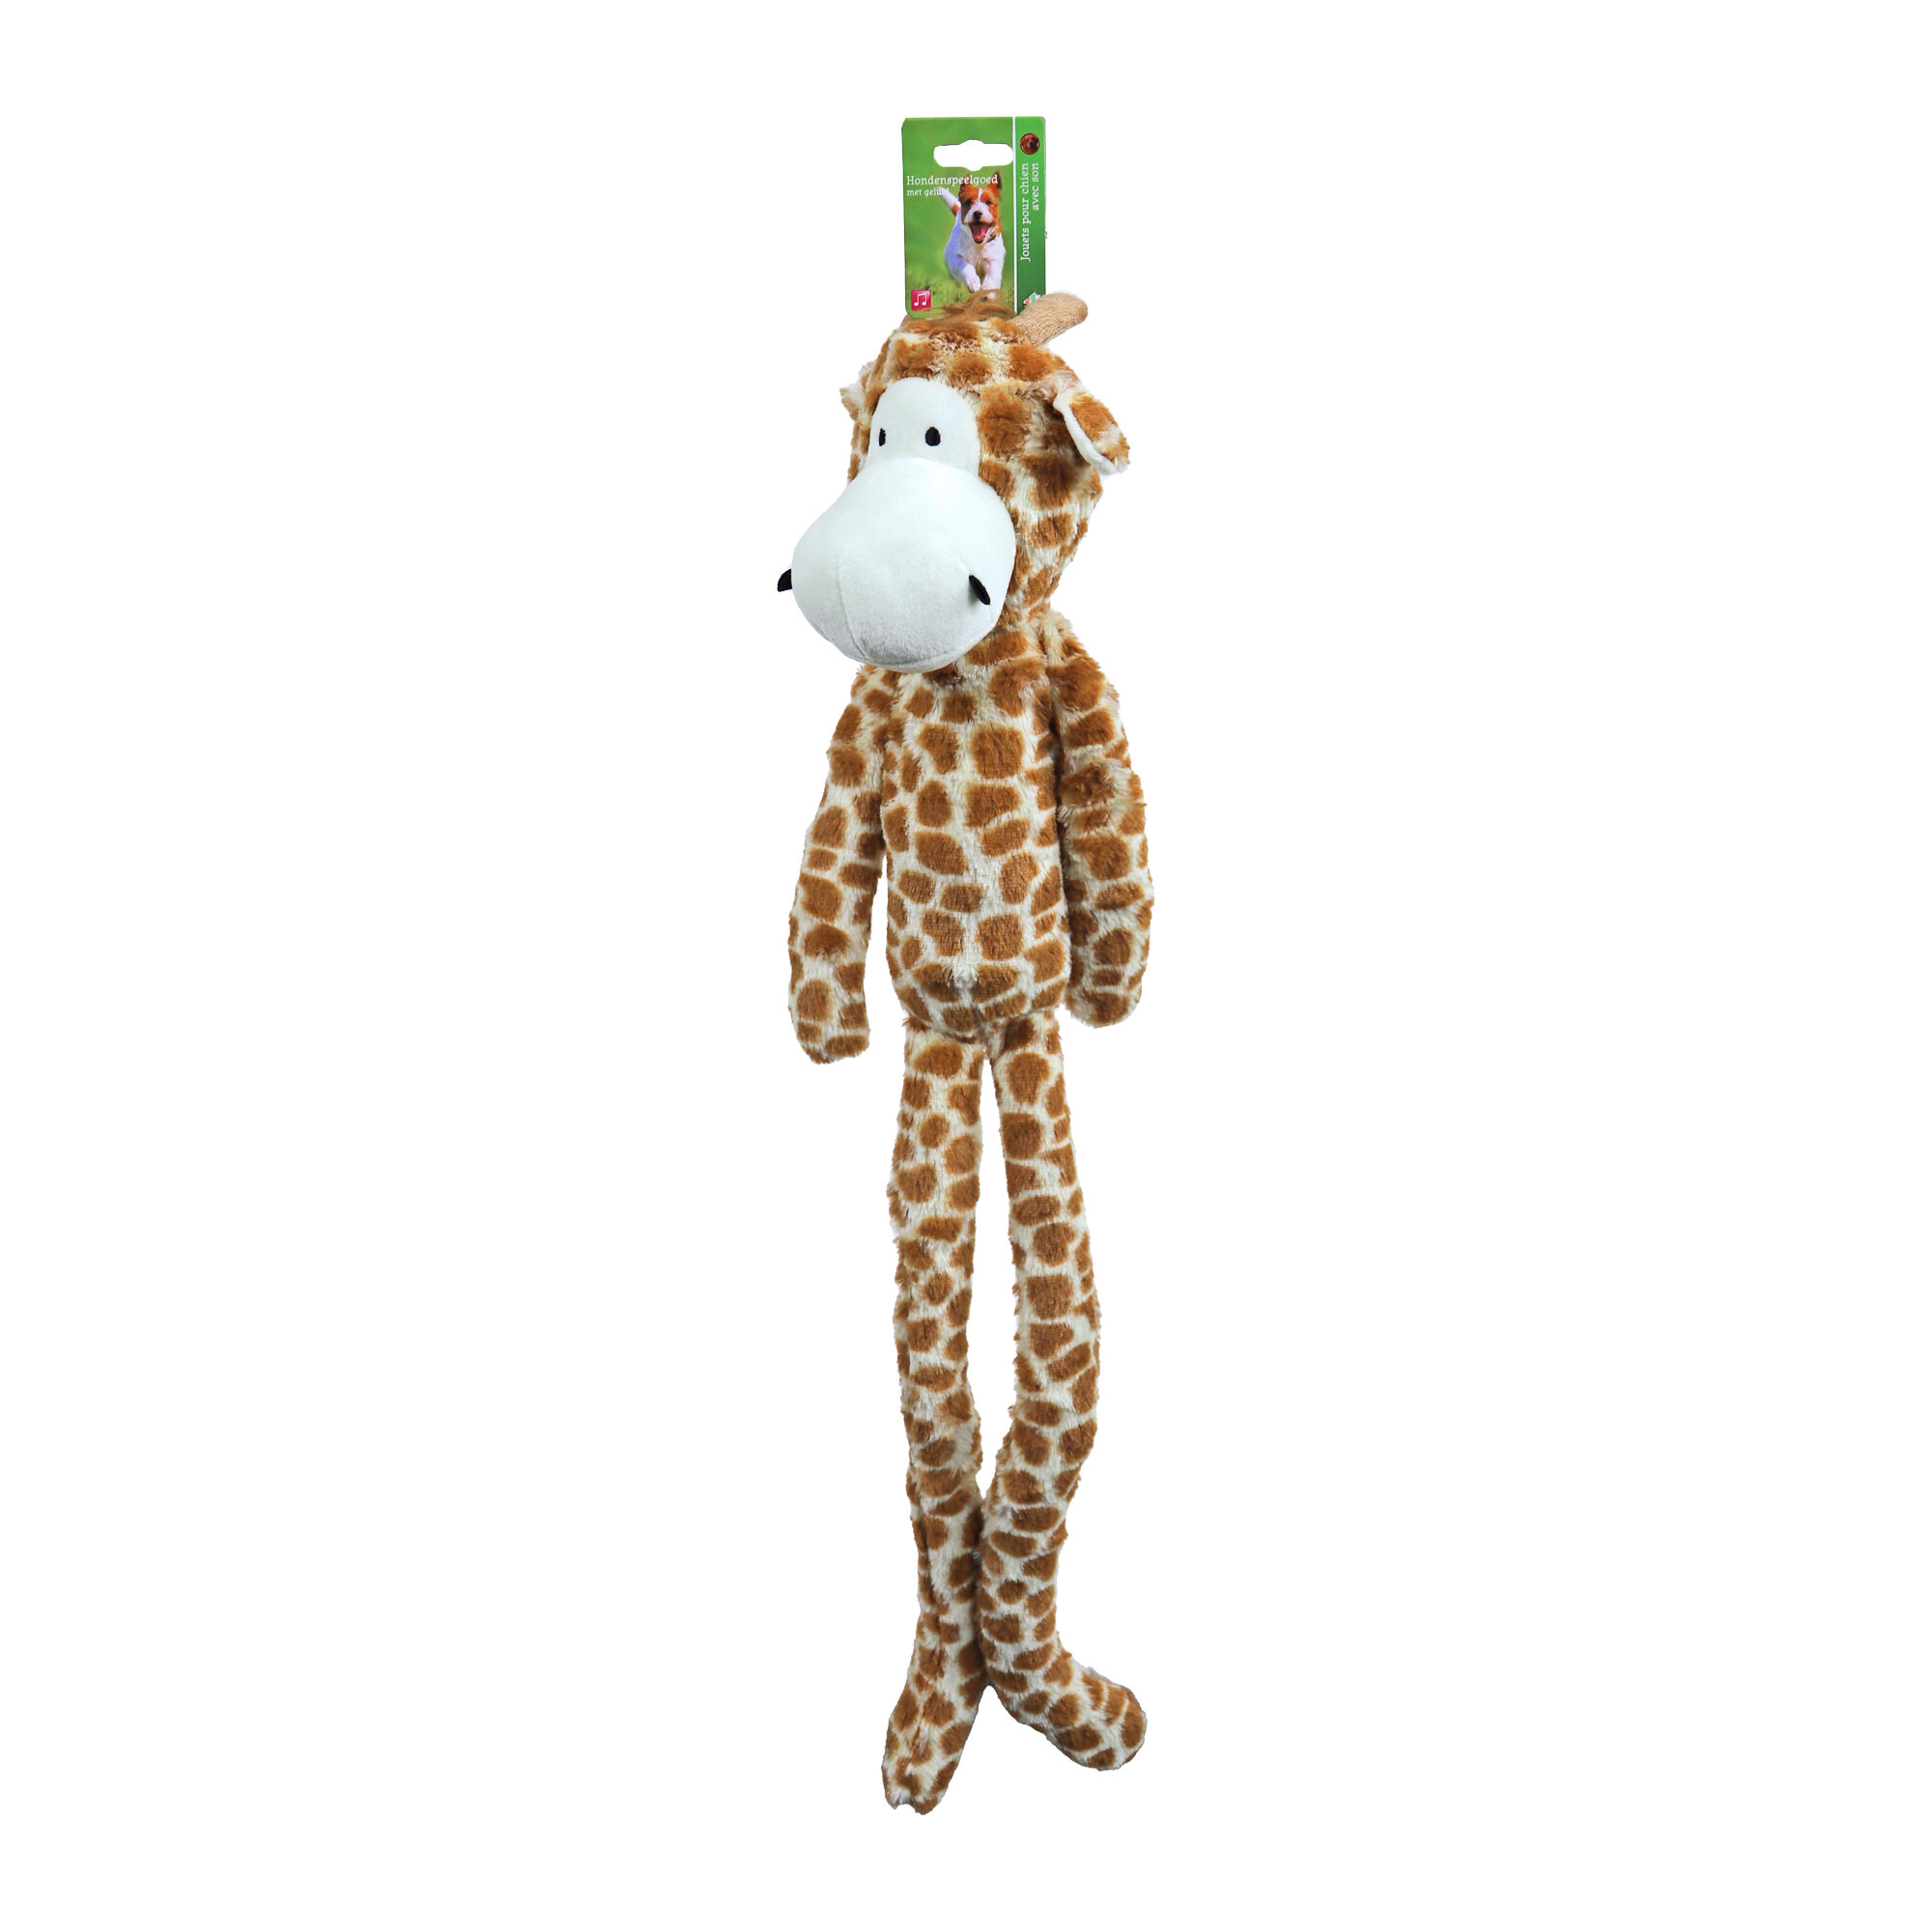 Boon Hondenspeelgoed XXL - Giraffe